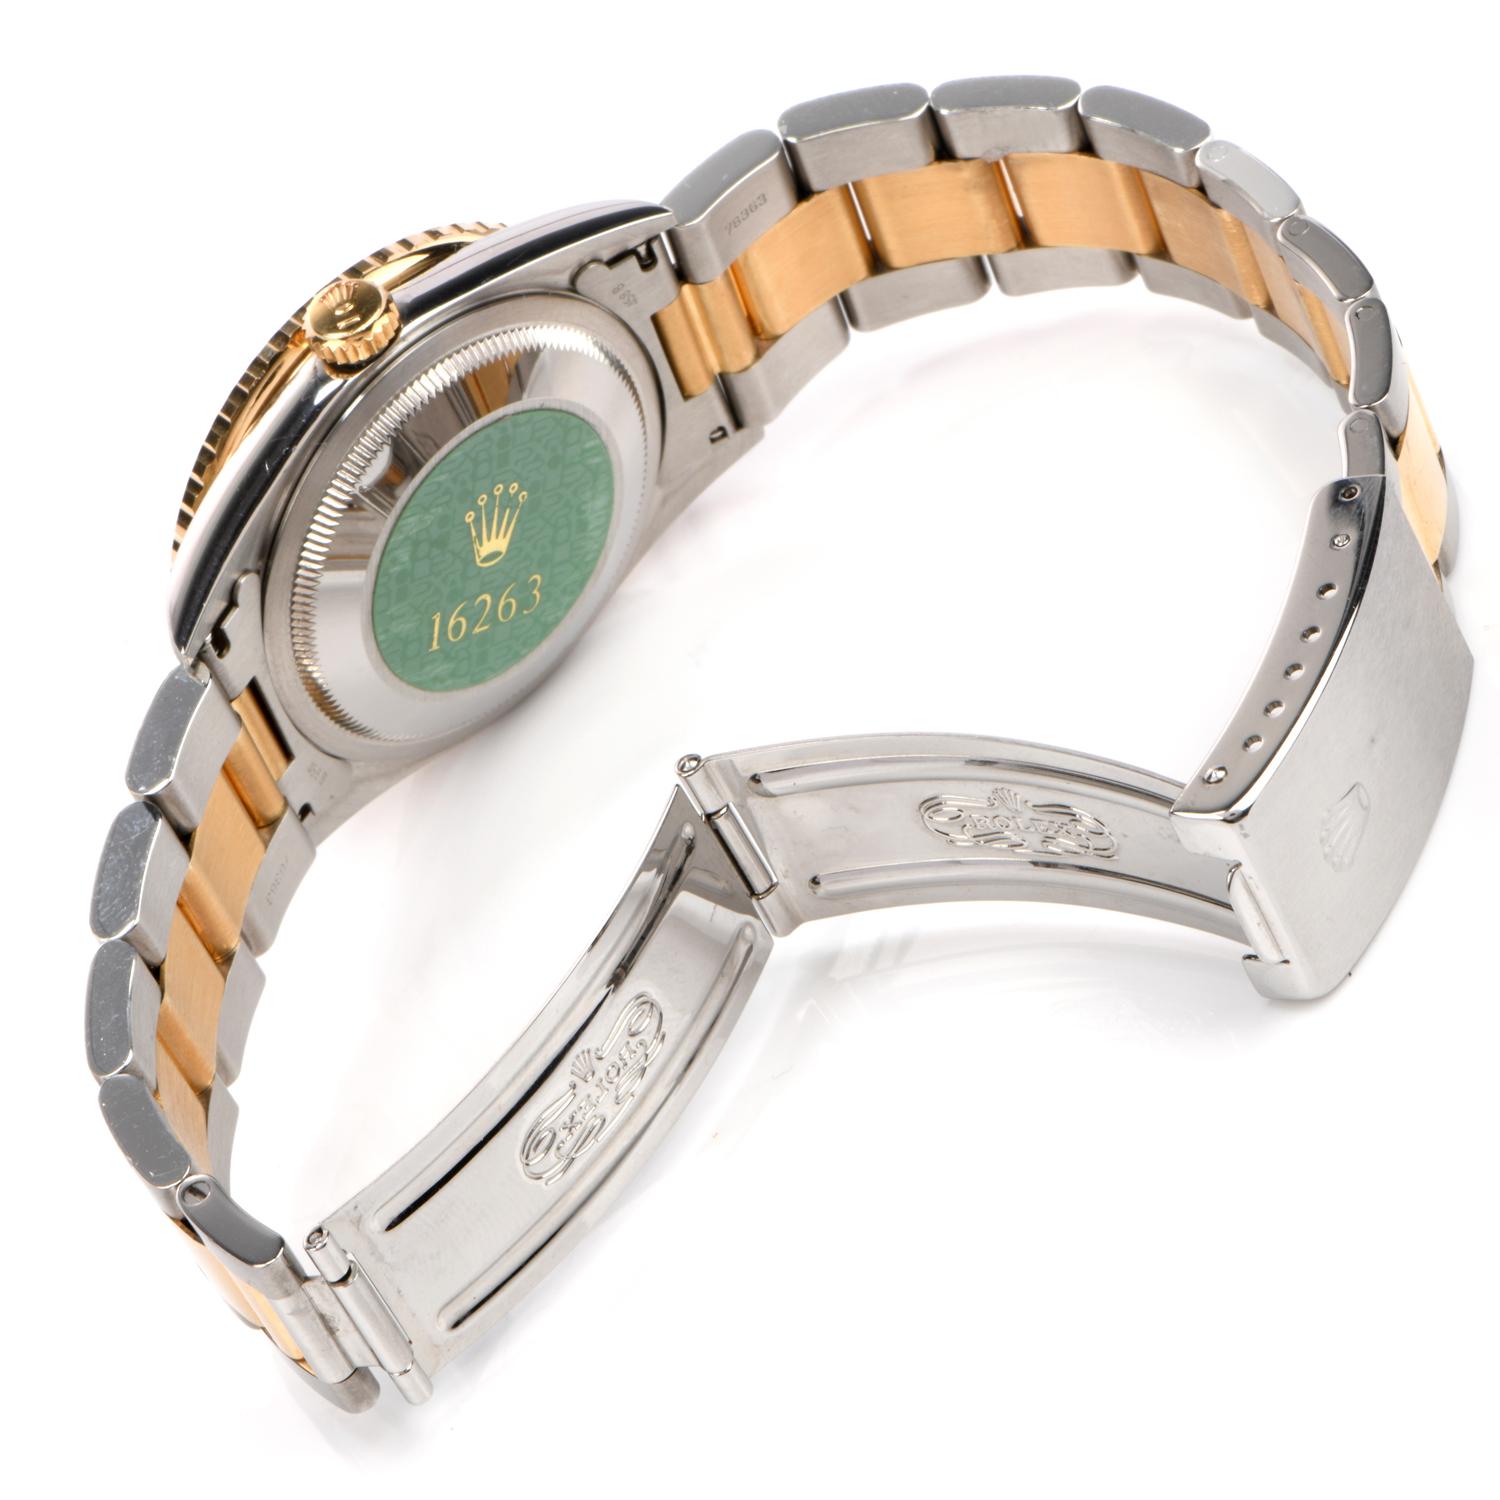 Modern Rolex Thunderbird Datejust Turn-O-Graph Ref. 16263 Steel & Gold Watch